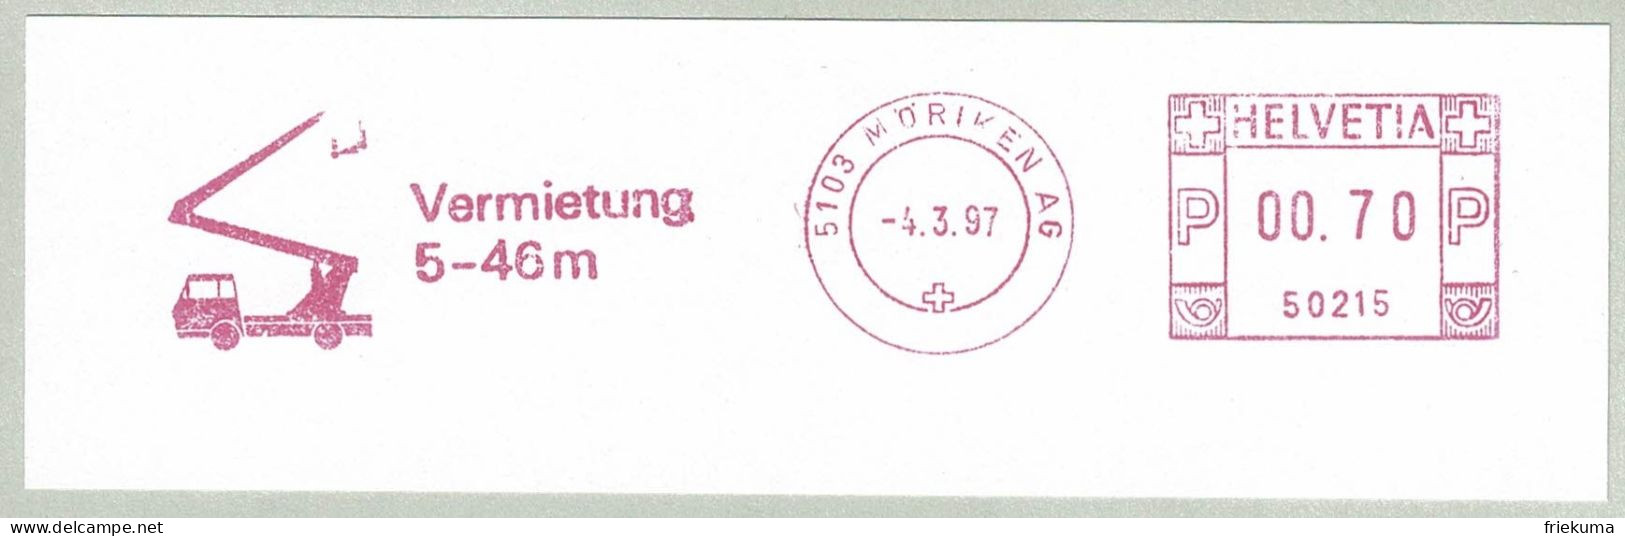 Schweiz / Helvetia 1997, Freistempel / EMA / Meterstamp Möriken, Vermietung Autokrane / Renting Truck Cranes - Trucks